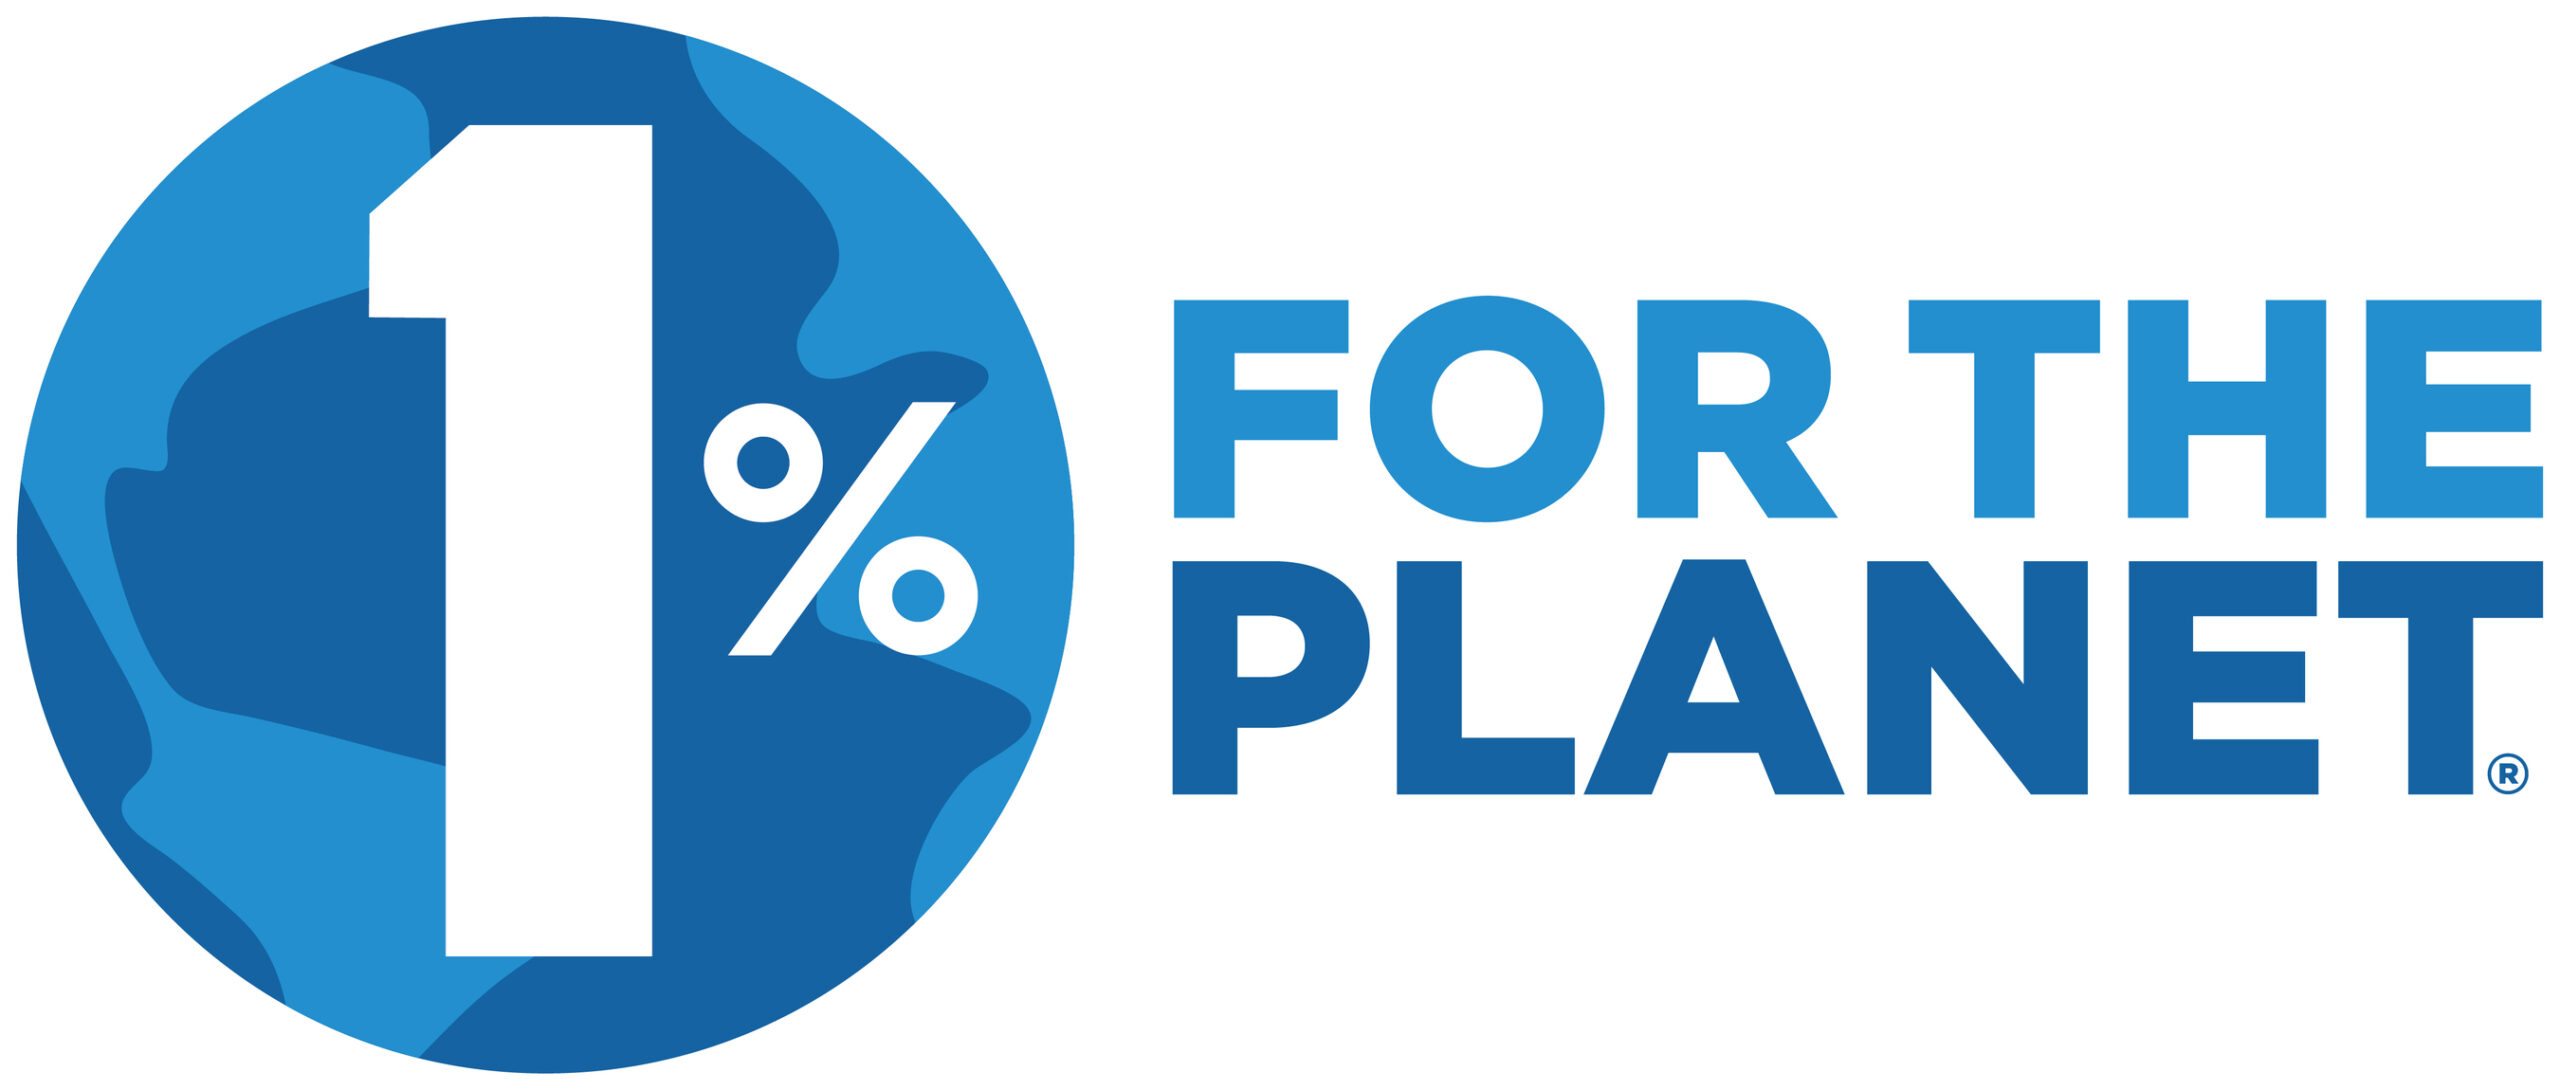 1% for the Planet Business Member Logo - High Res (PRNewsfoto/OXO INTERNATIONAL)